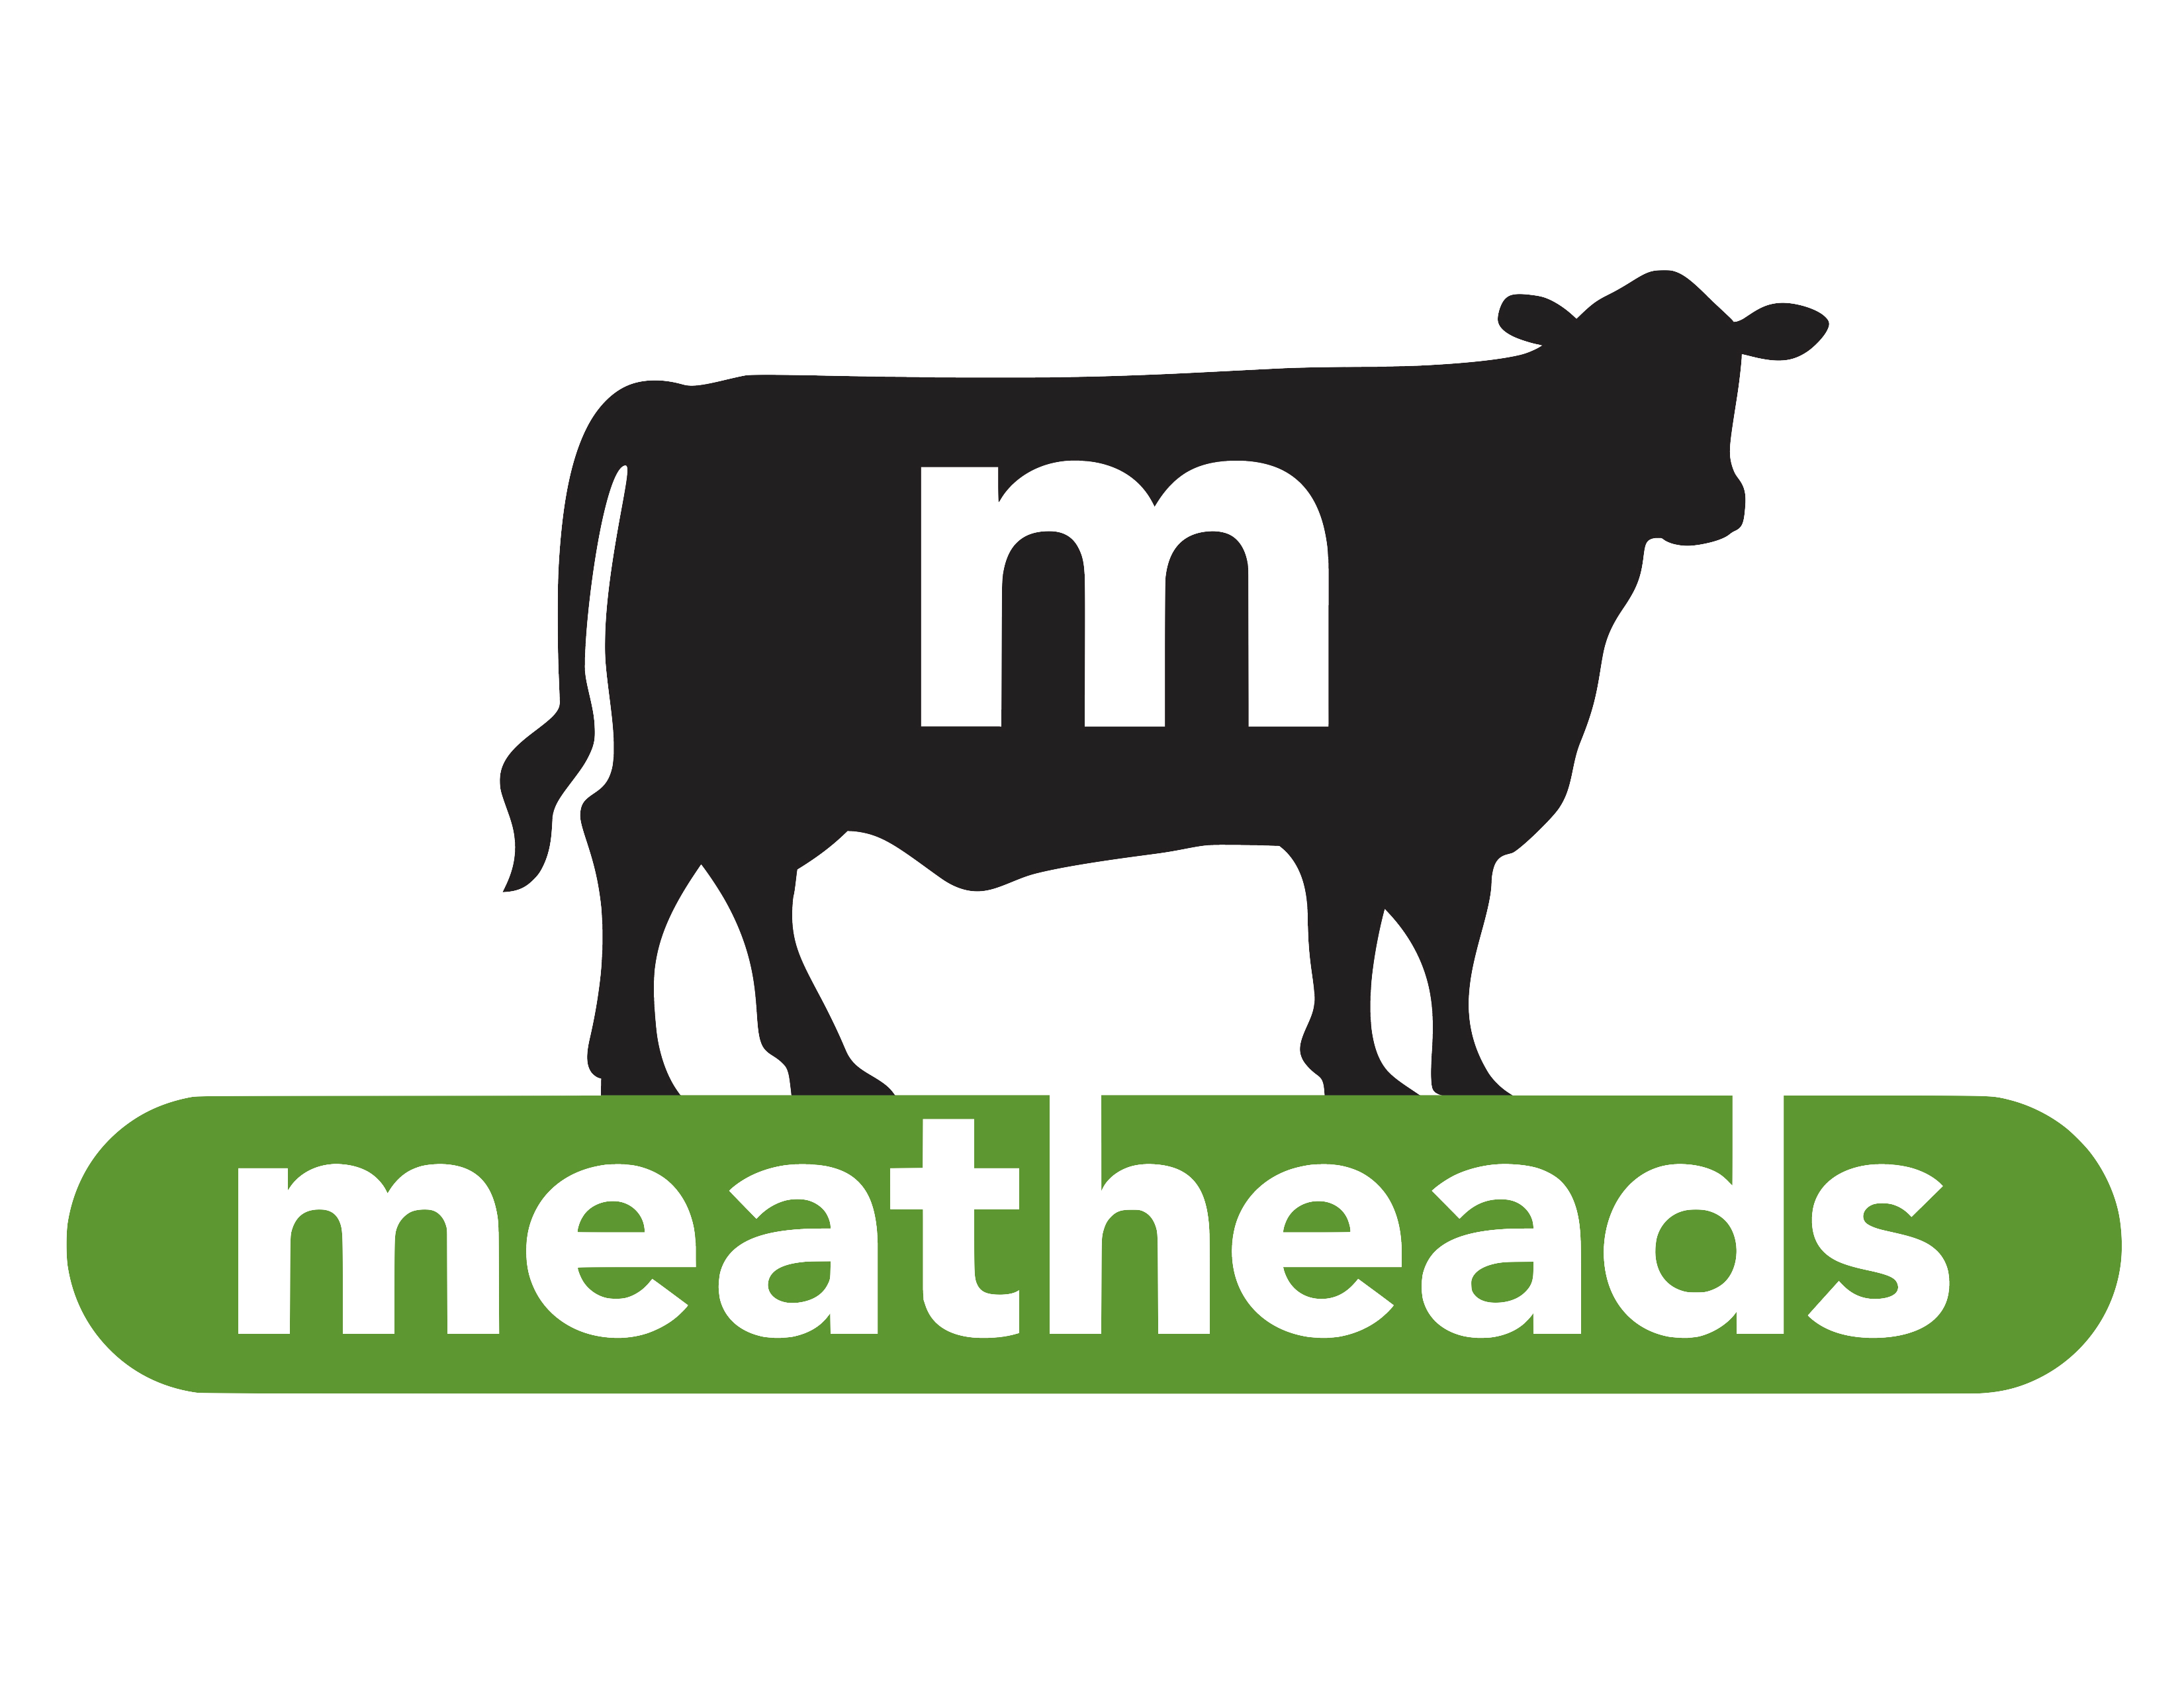 meatheads-green-logo